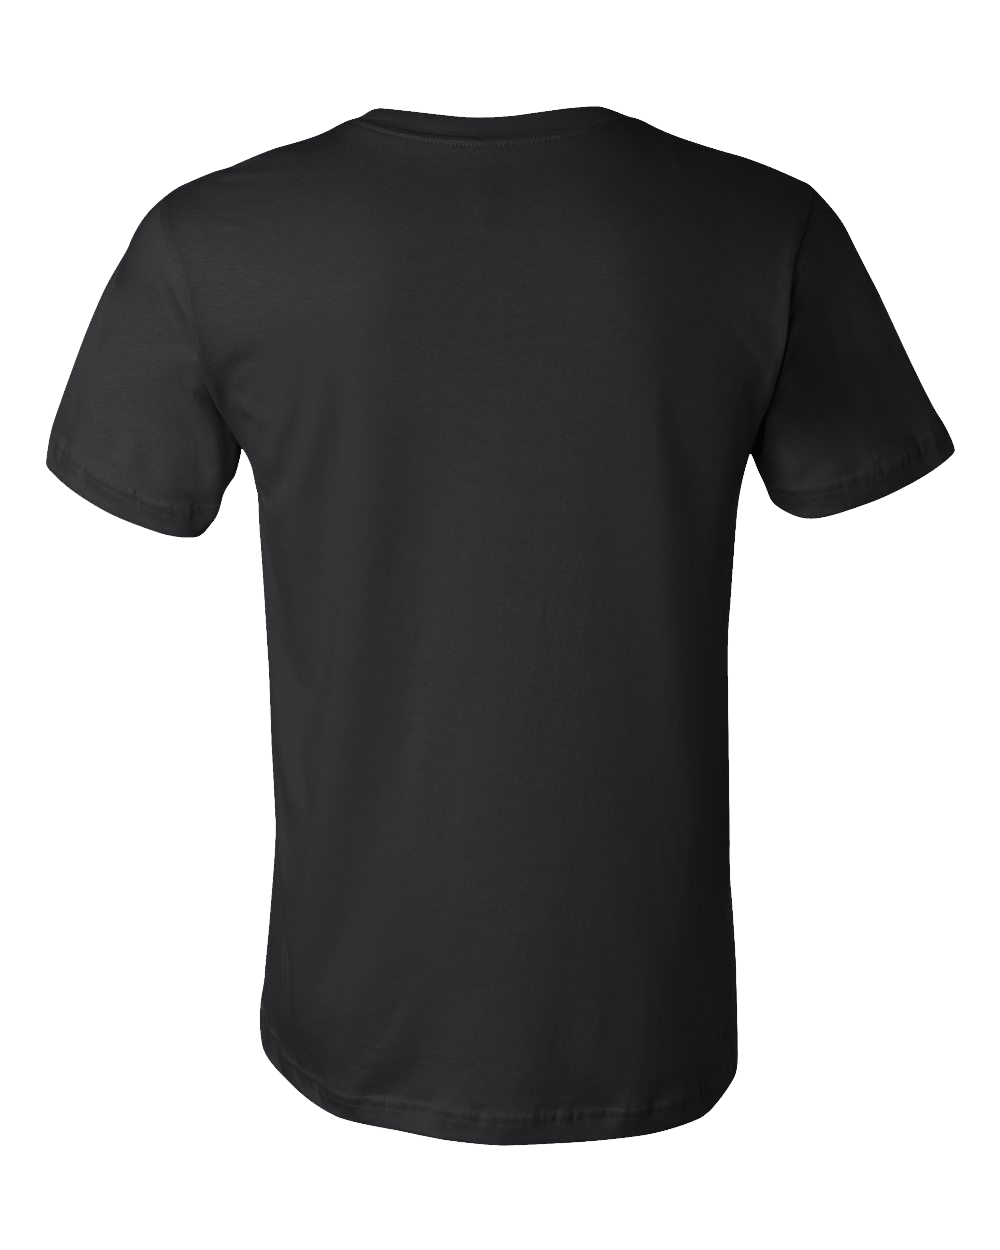 Standard Black Springfield, NE | Retro, Vintage Style Nebraska Pride  T-shirt